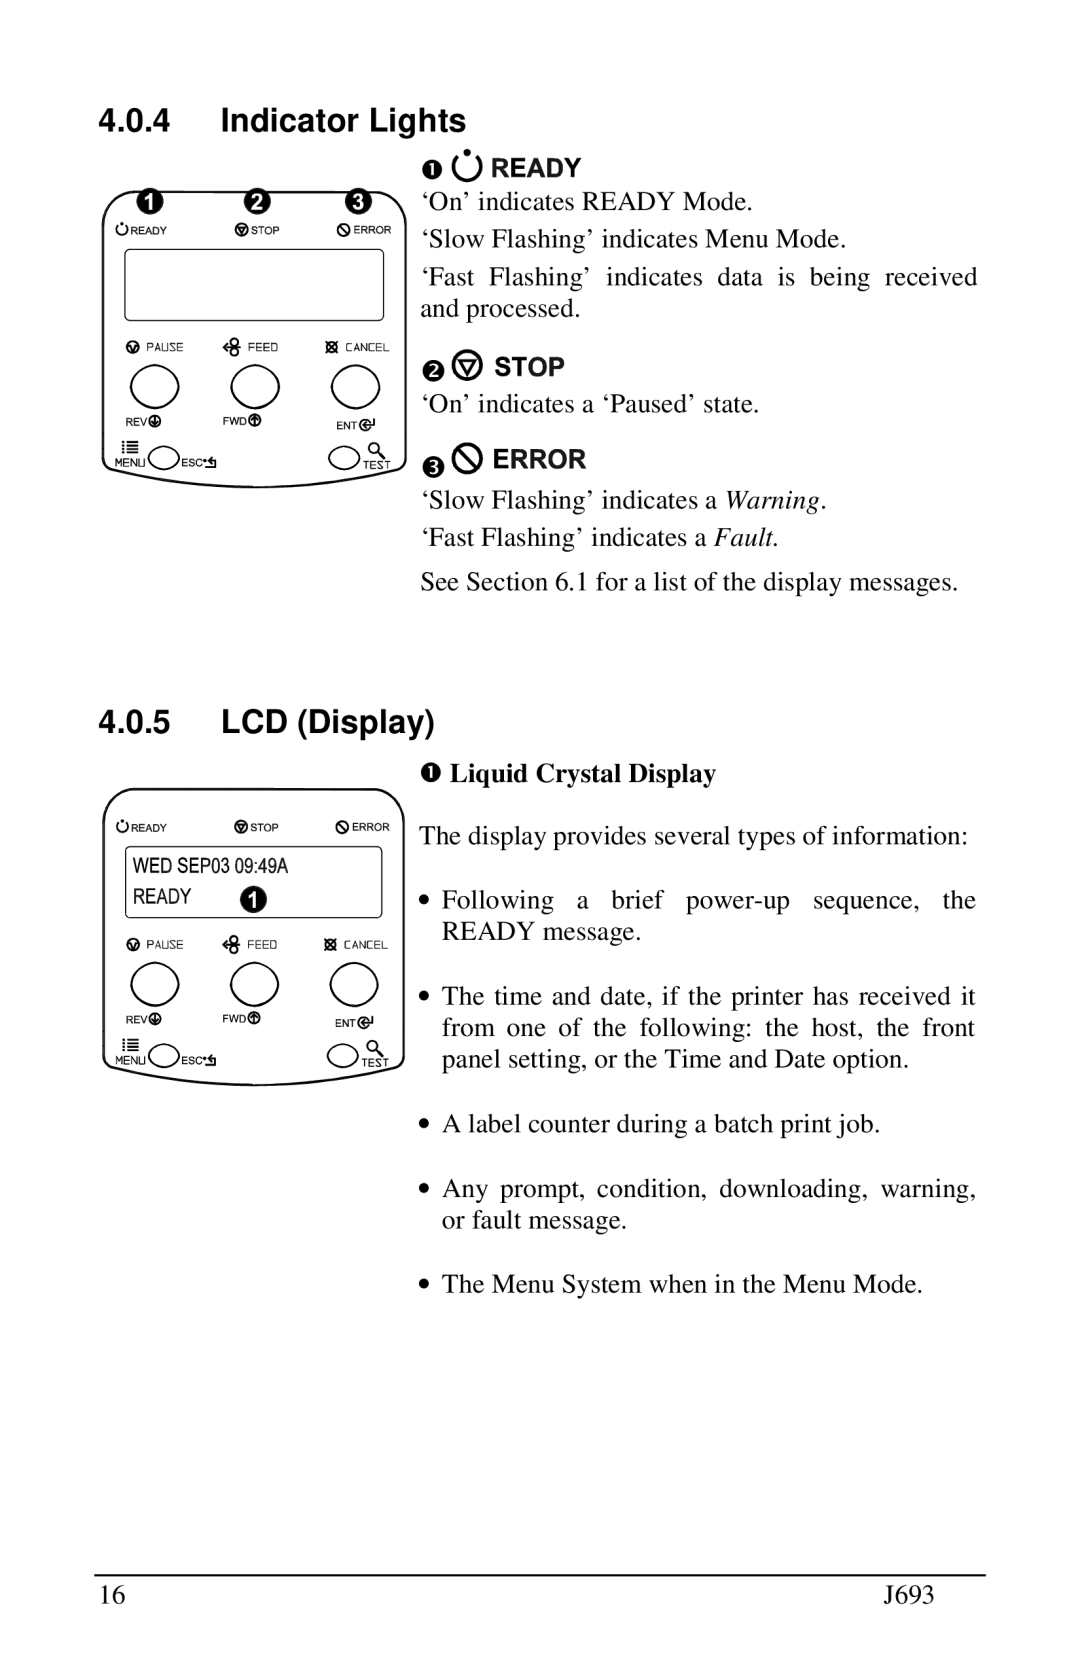 Pitney Bowes J693 manual Indicator Lights, LCD Display, n Liquid Crystal Display 